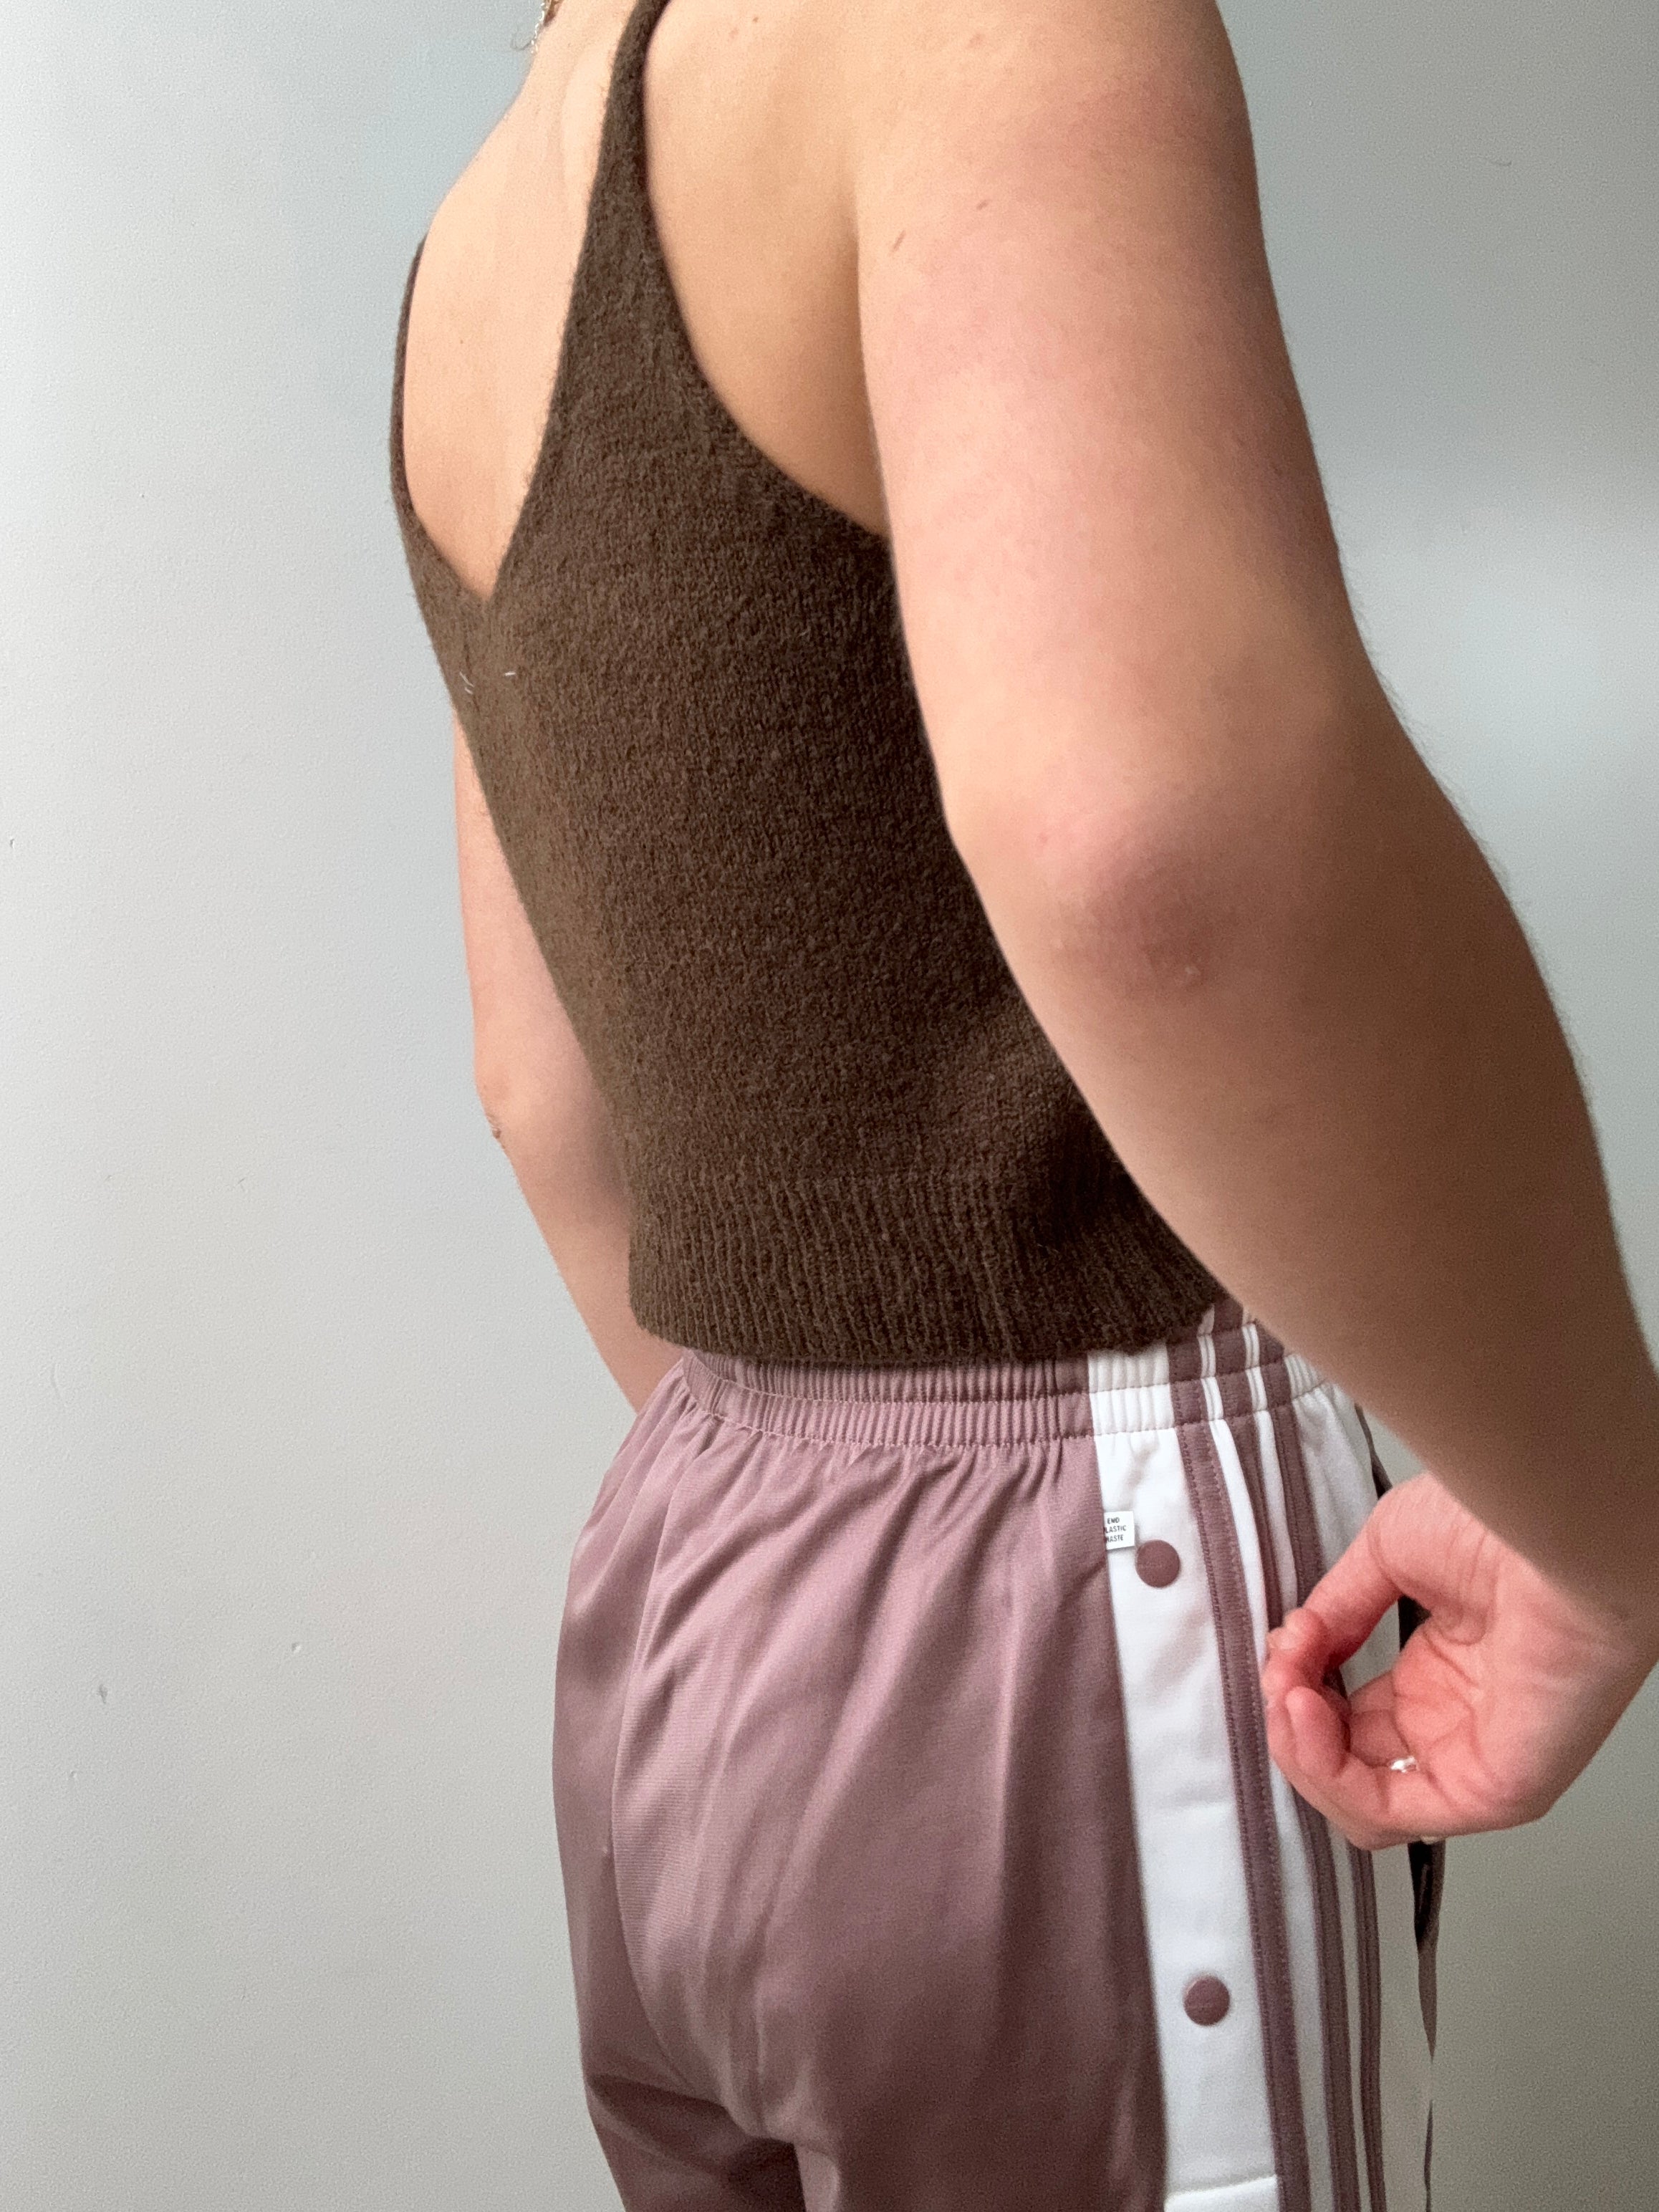 Future Nomads Singlets Small-Medium Chocolate Knit Camisole